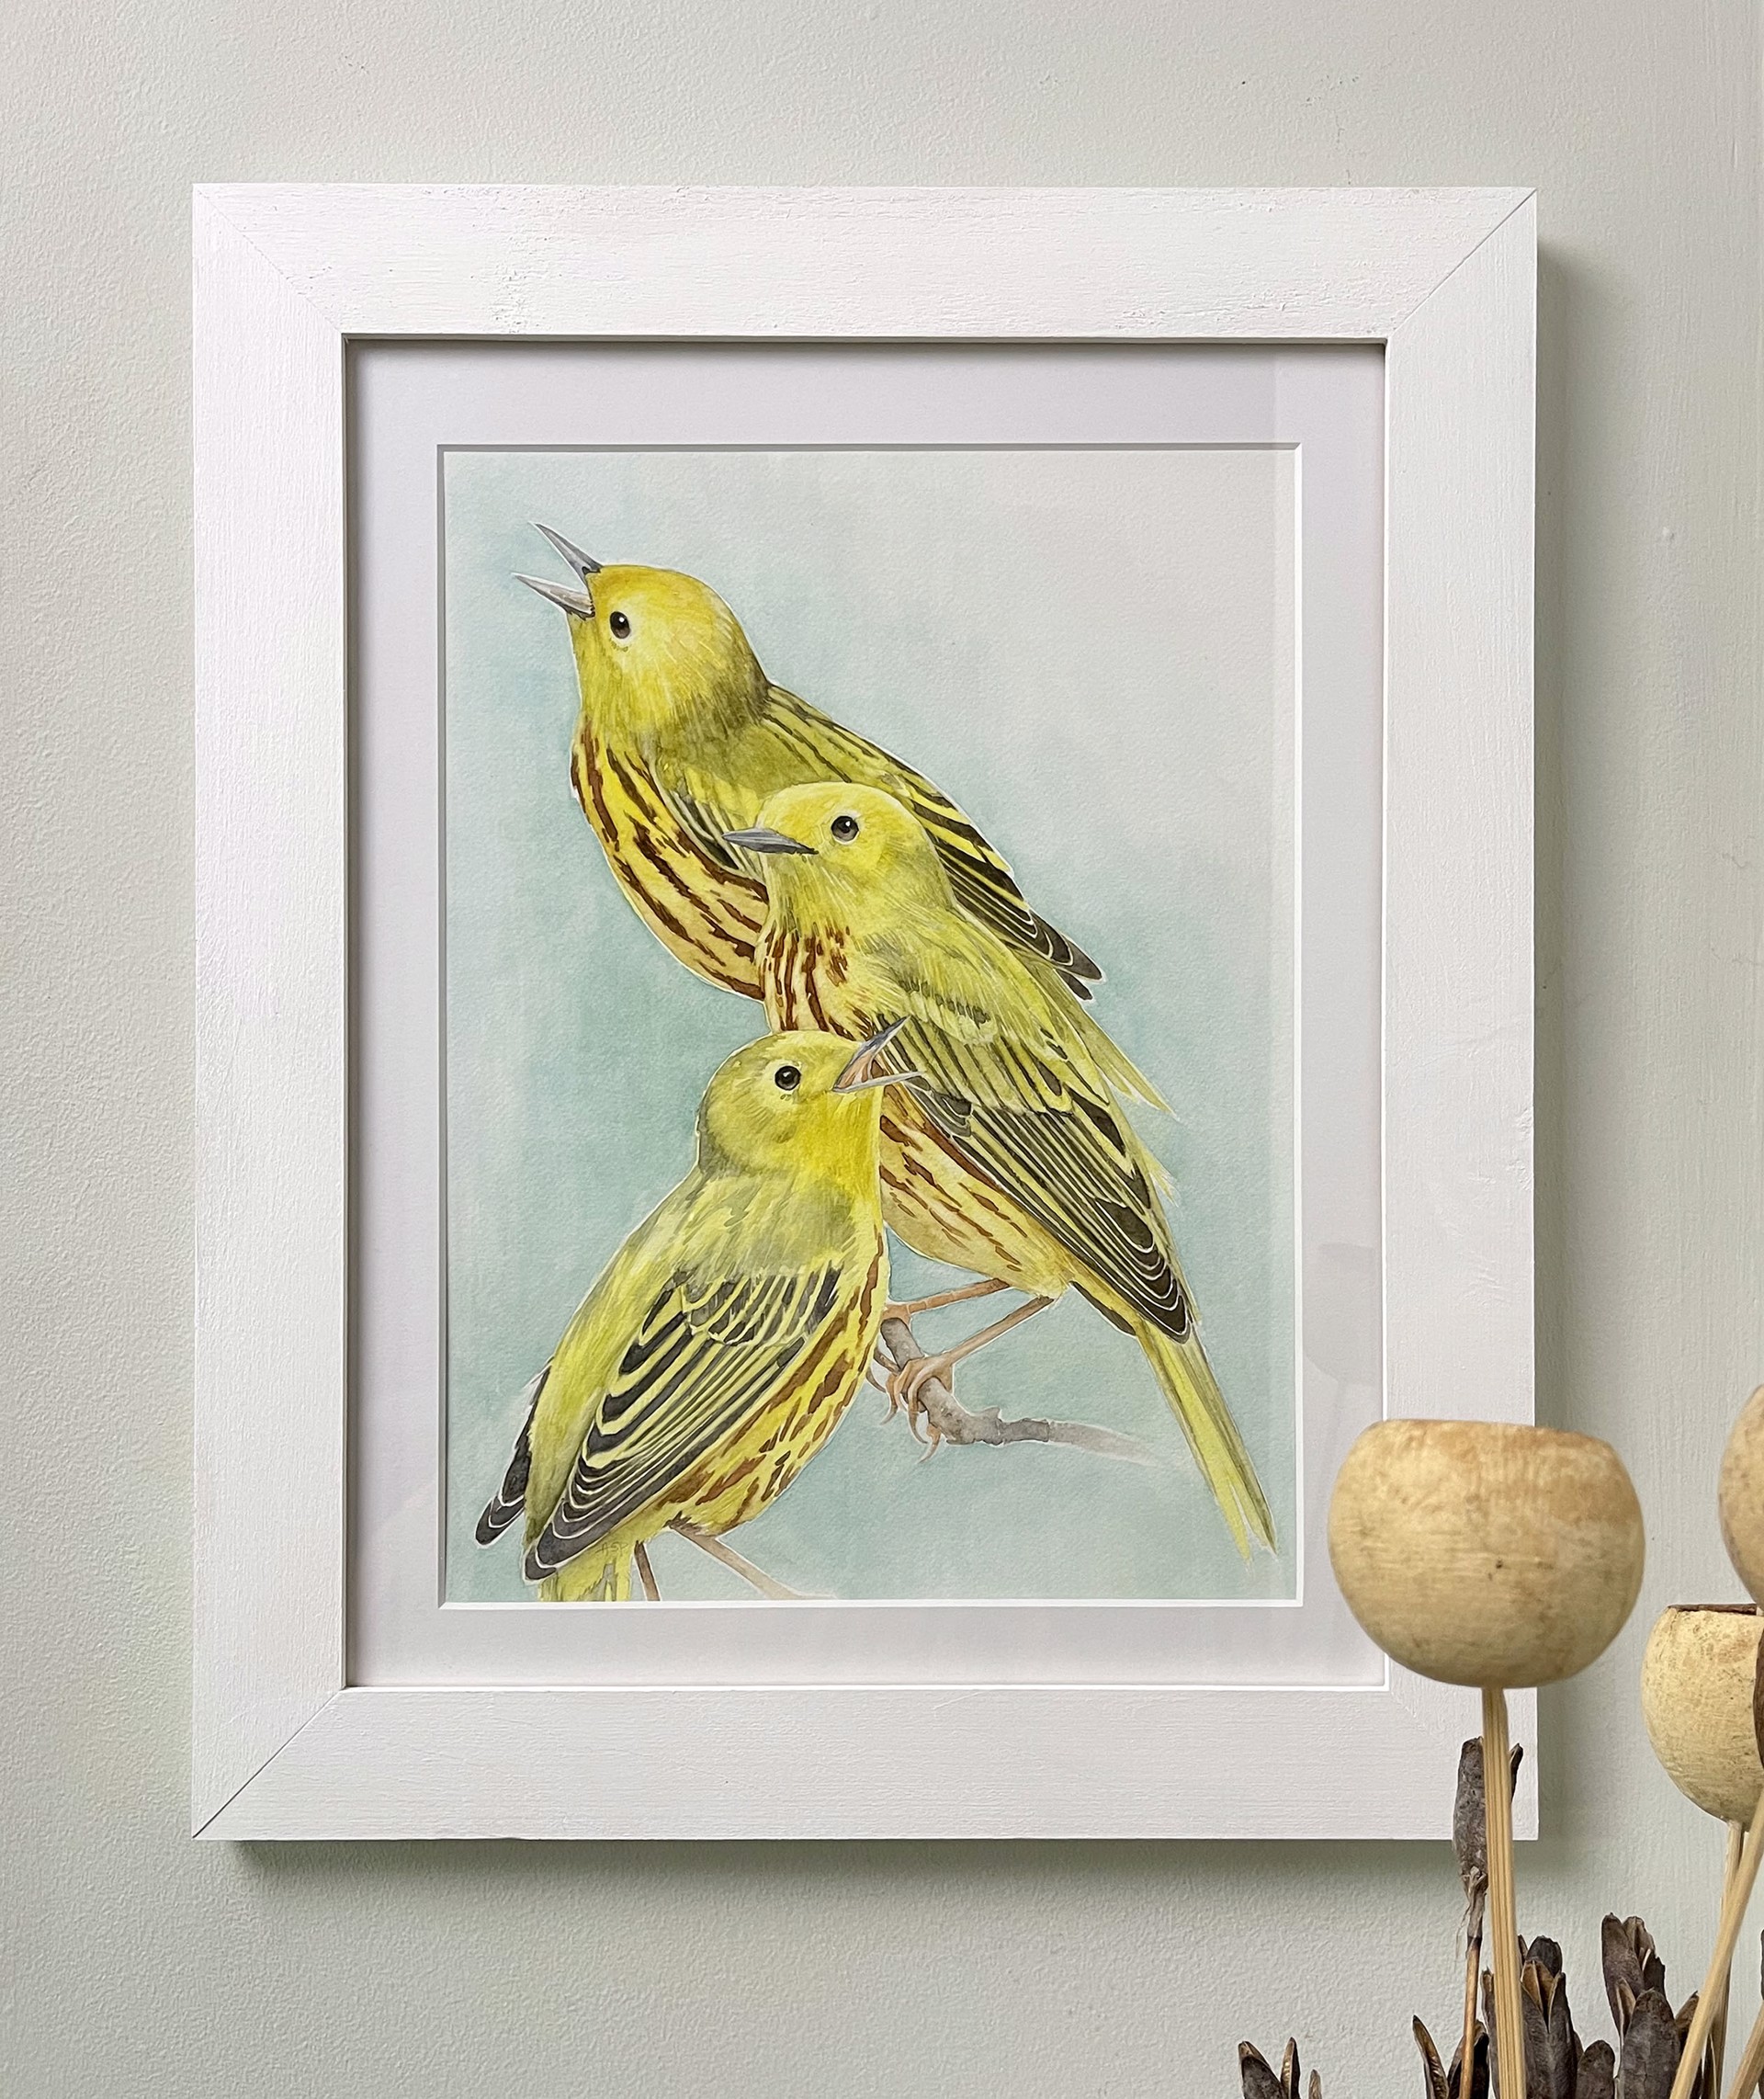 Crane Creek Chorus (Yellow Warblers) by Amy Shawley